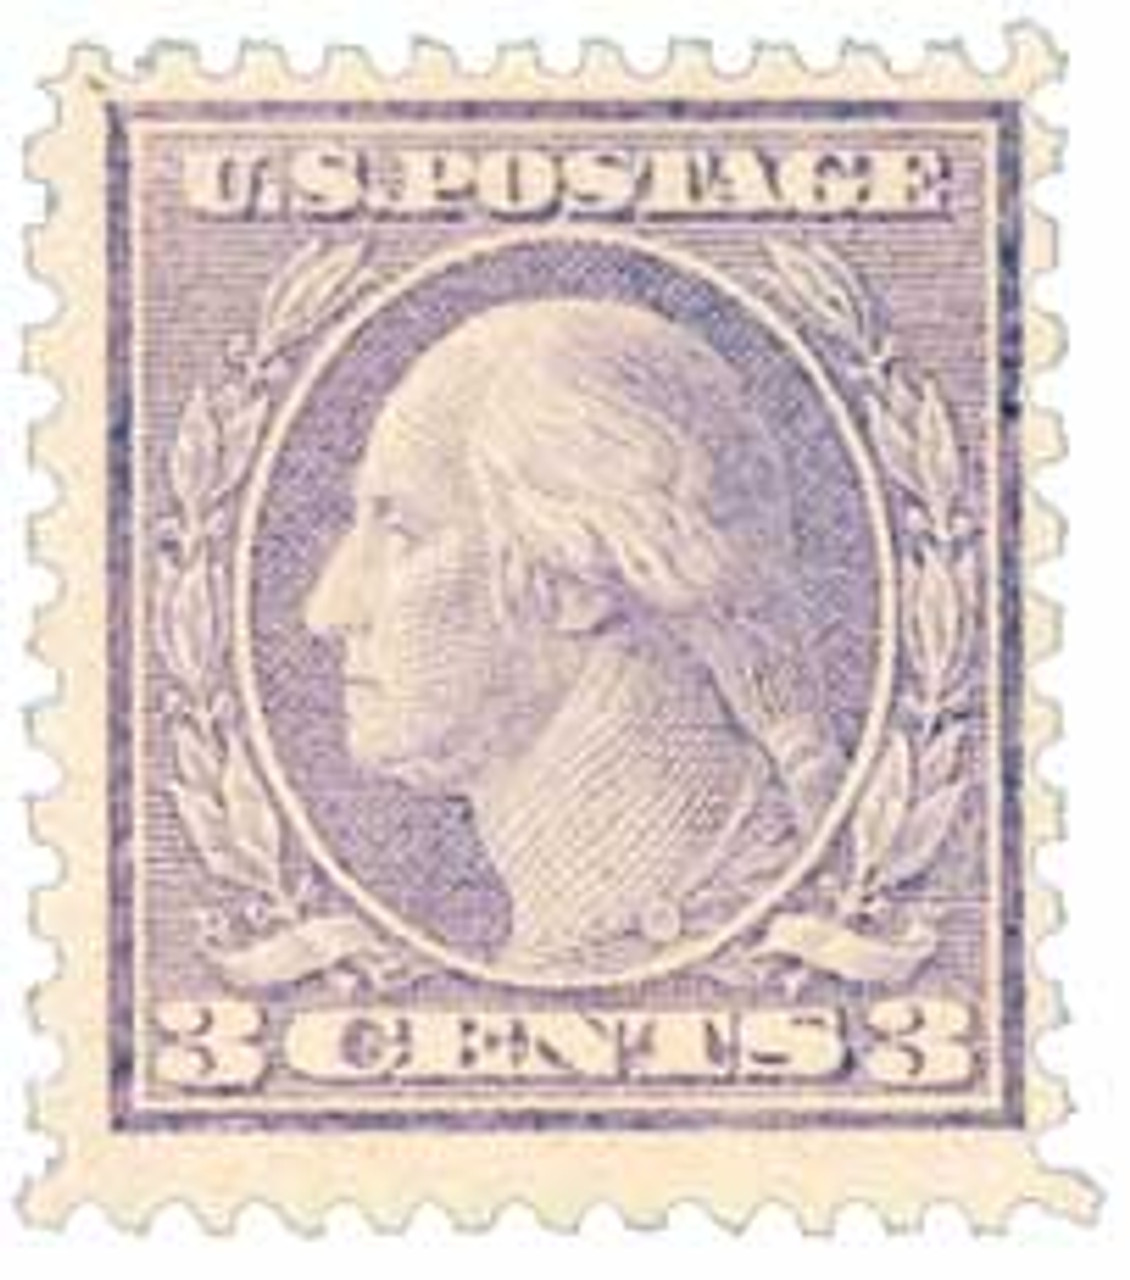 WW-Stamp-Packet-Assortment